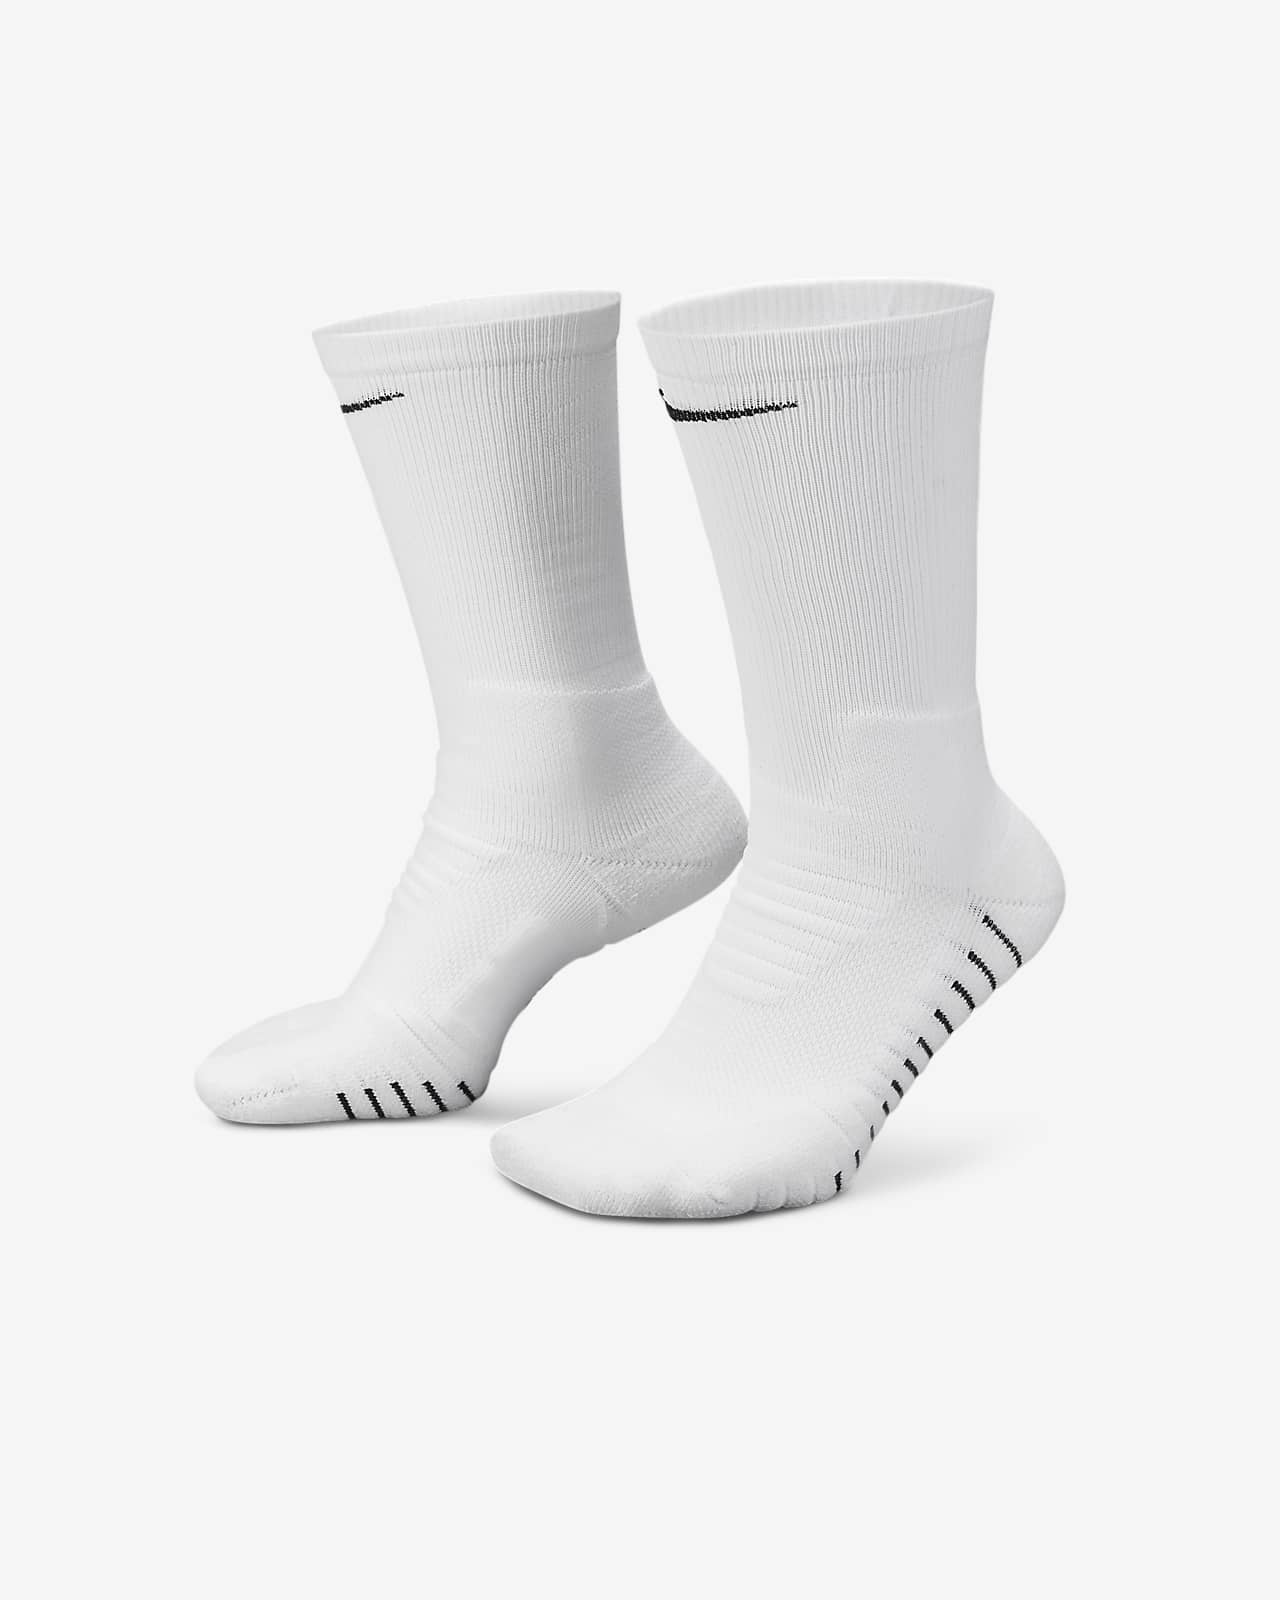 Calcetines largos de fútbol Nike Vapor